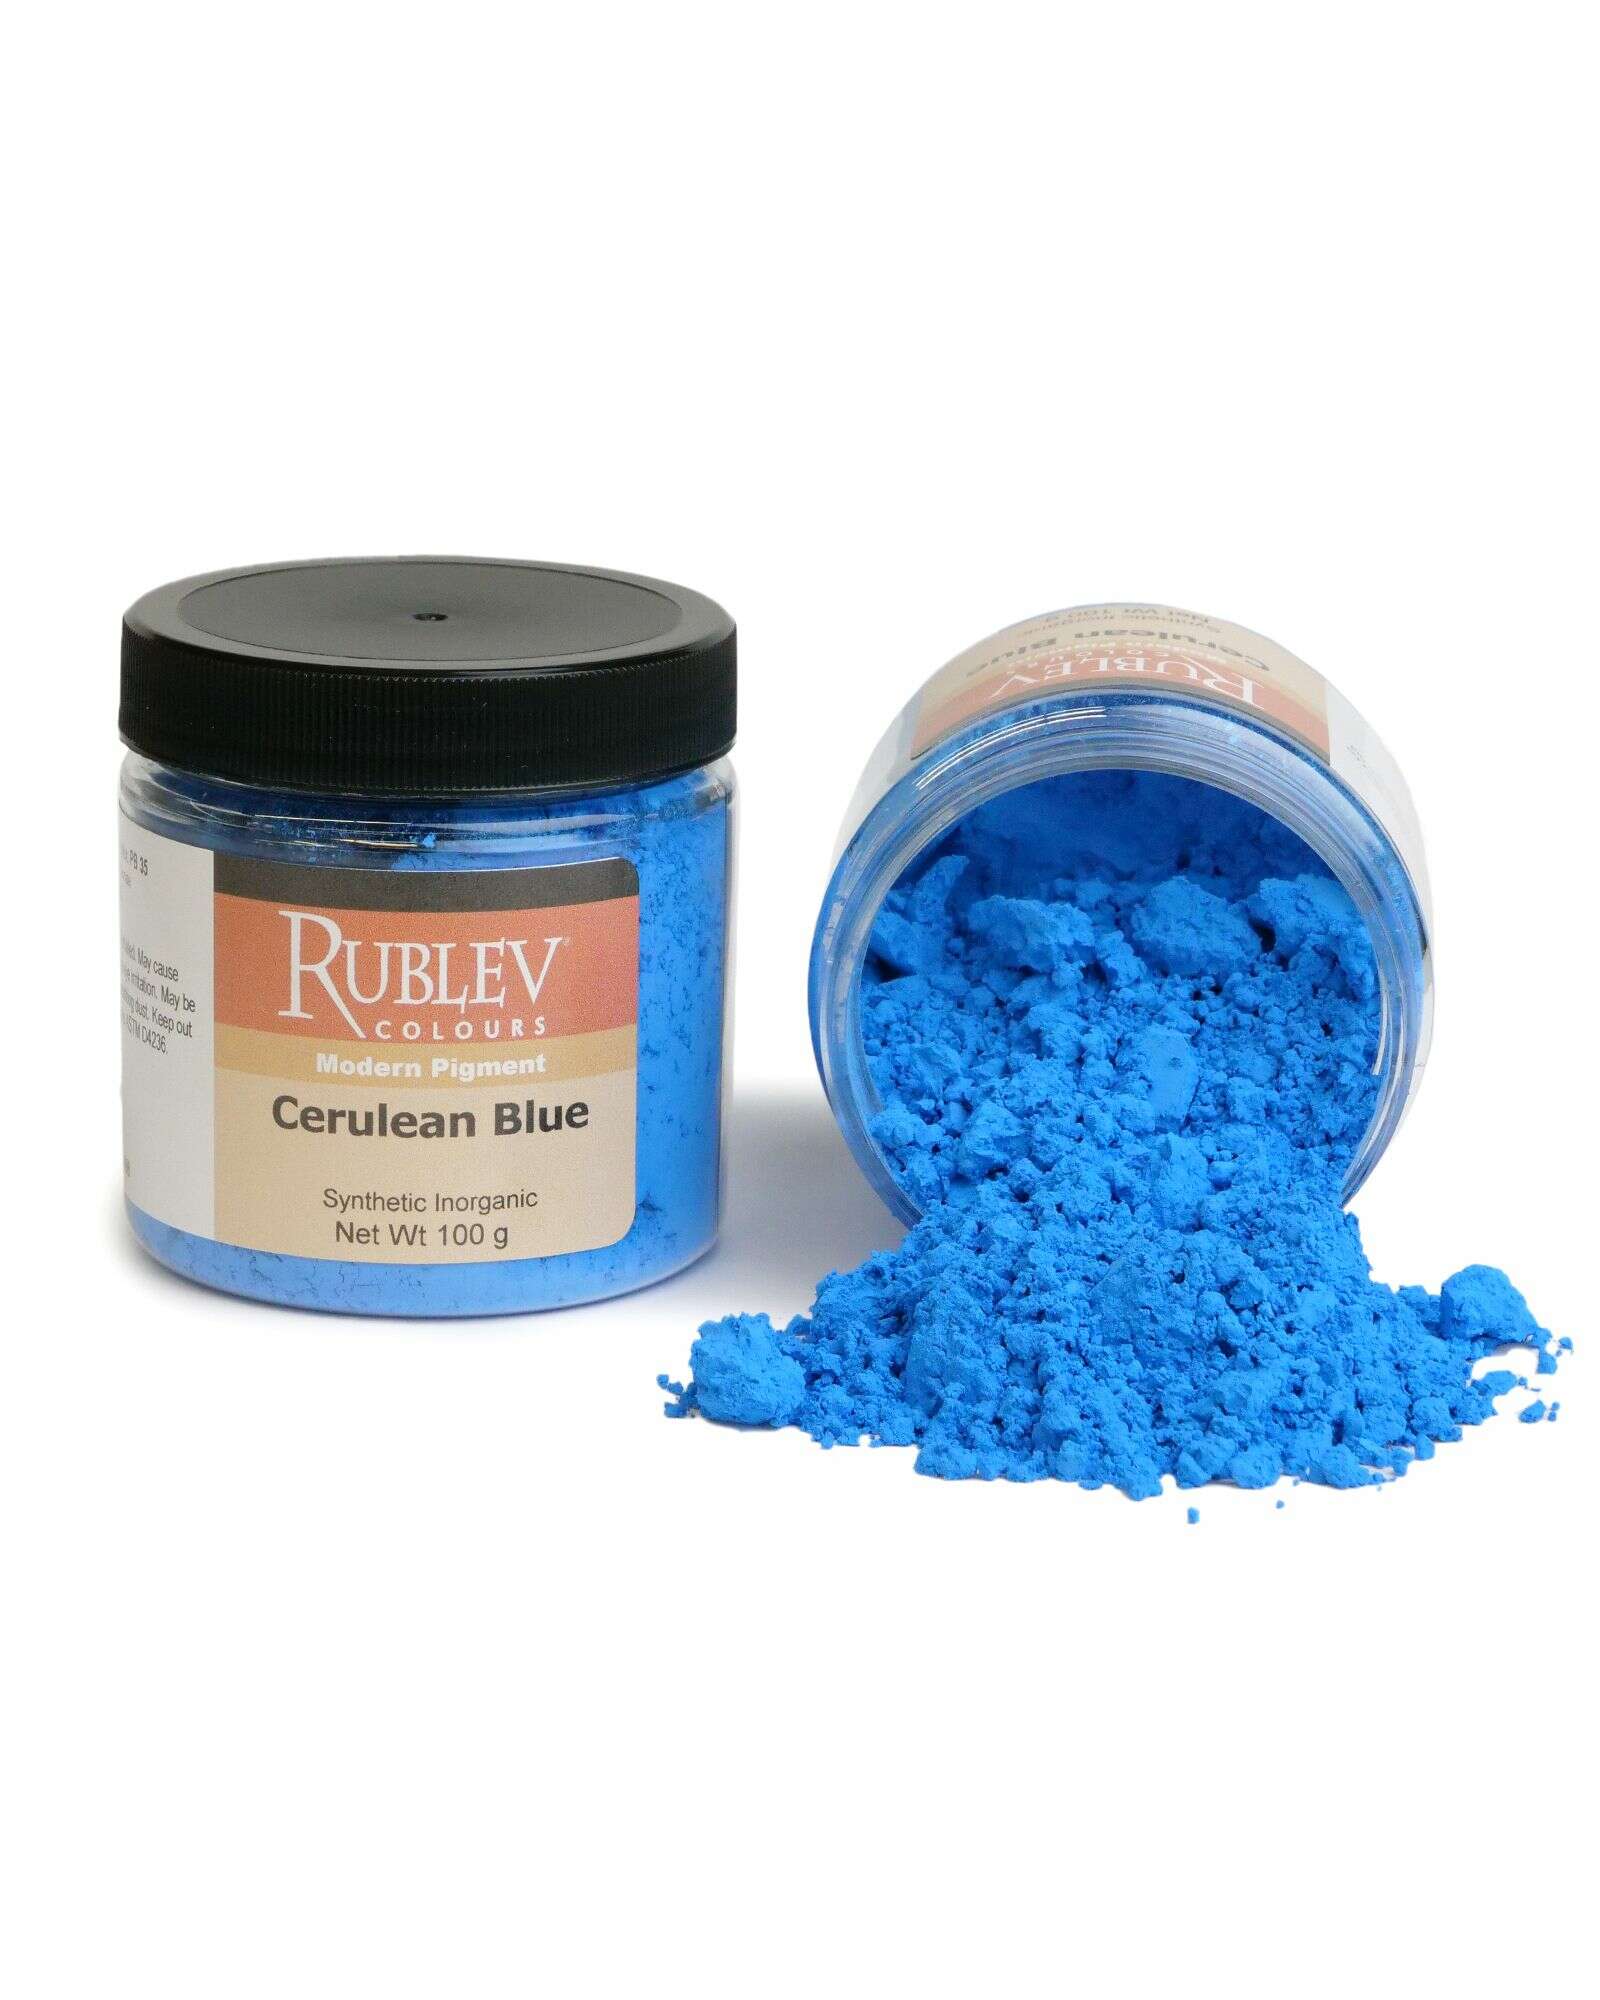 Rublev Colours Cerulean Blue Pigment - Durable, Lightfast, Non